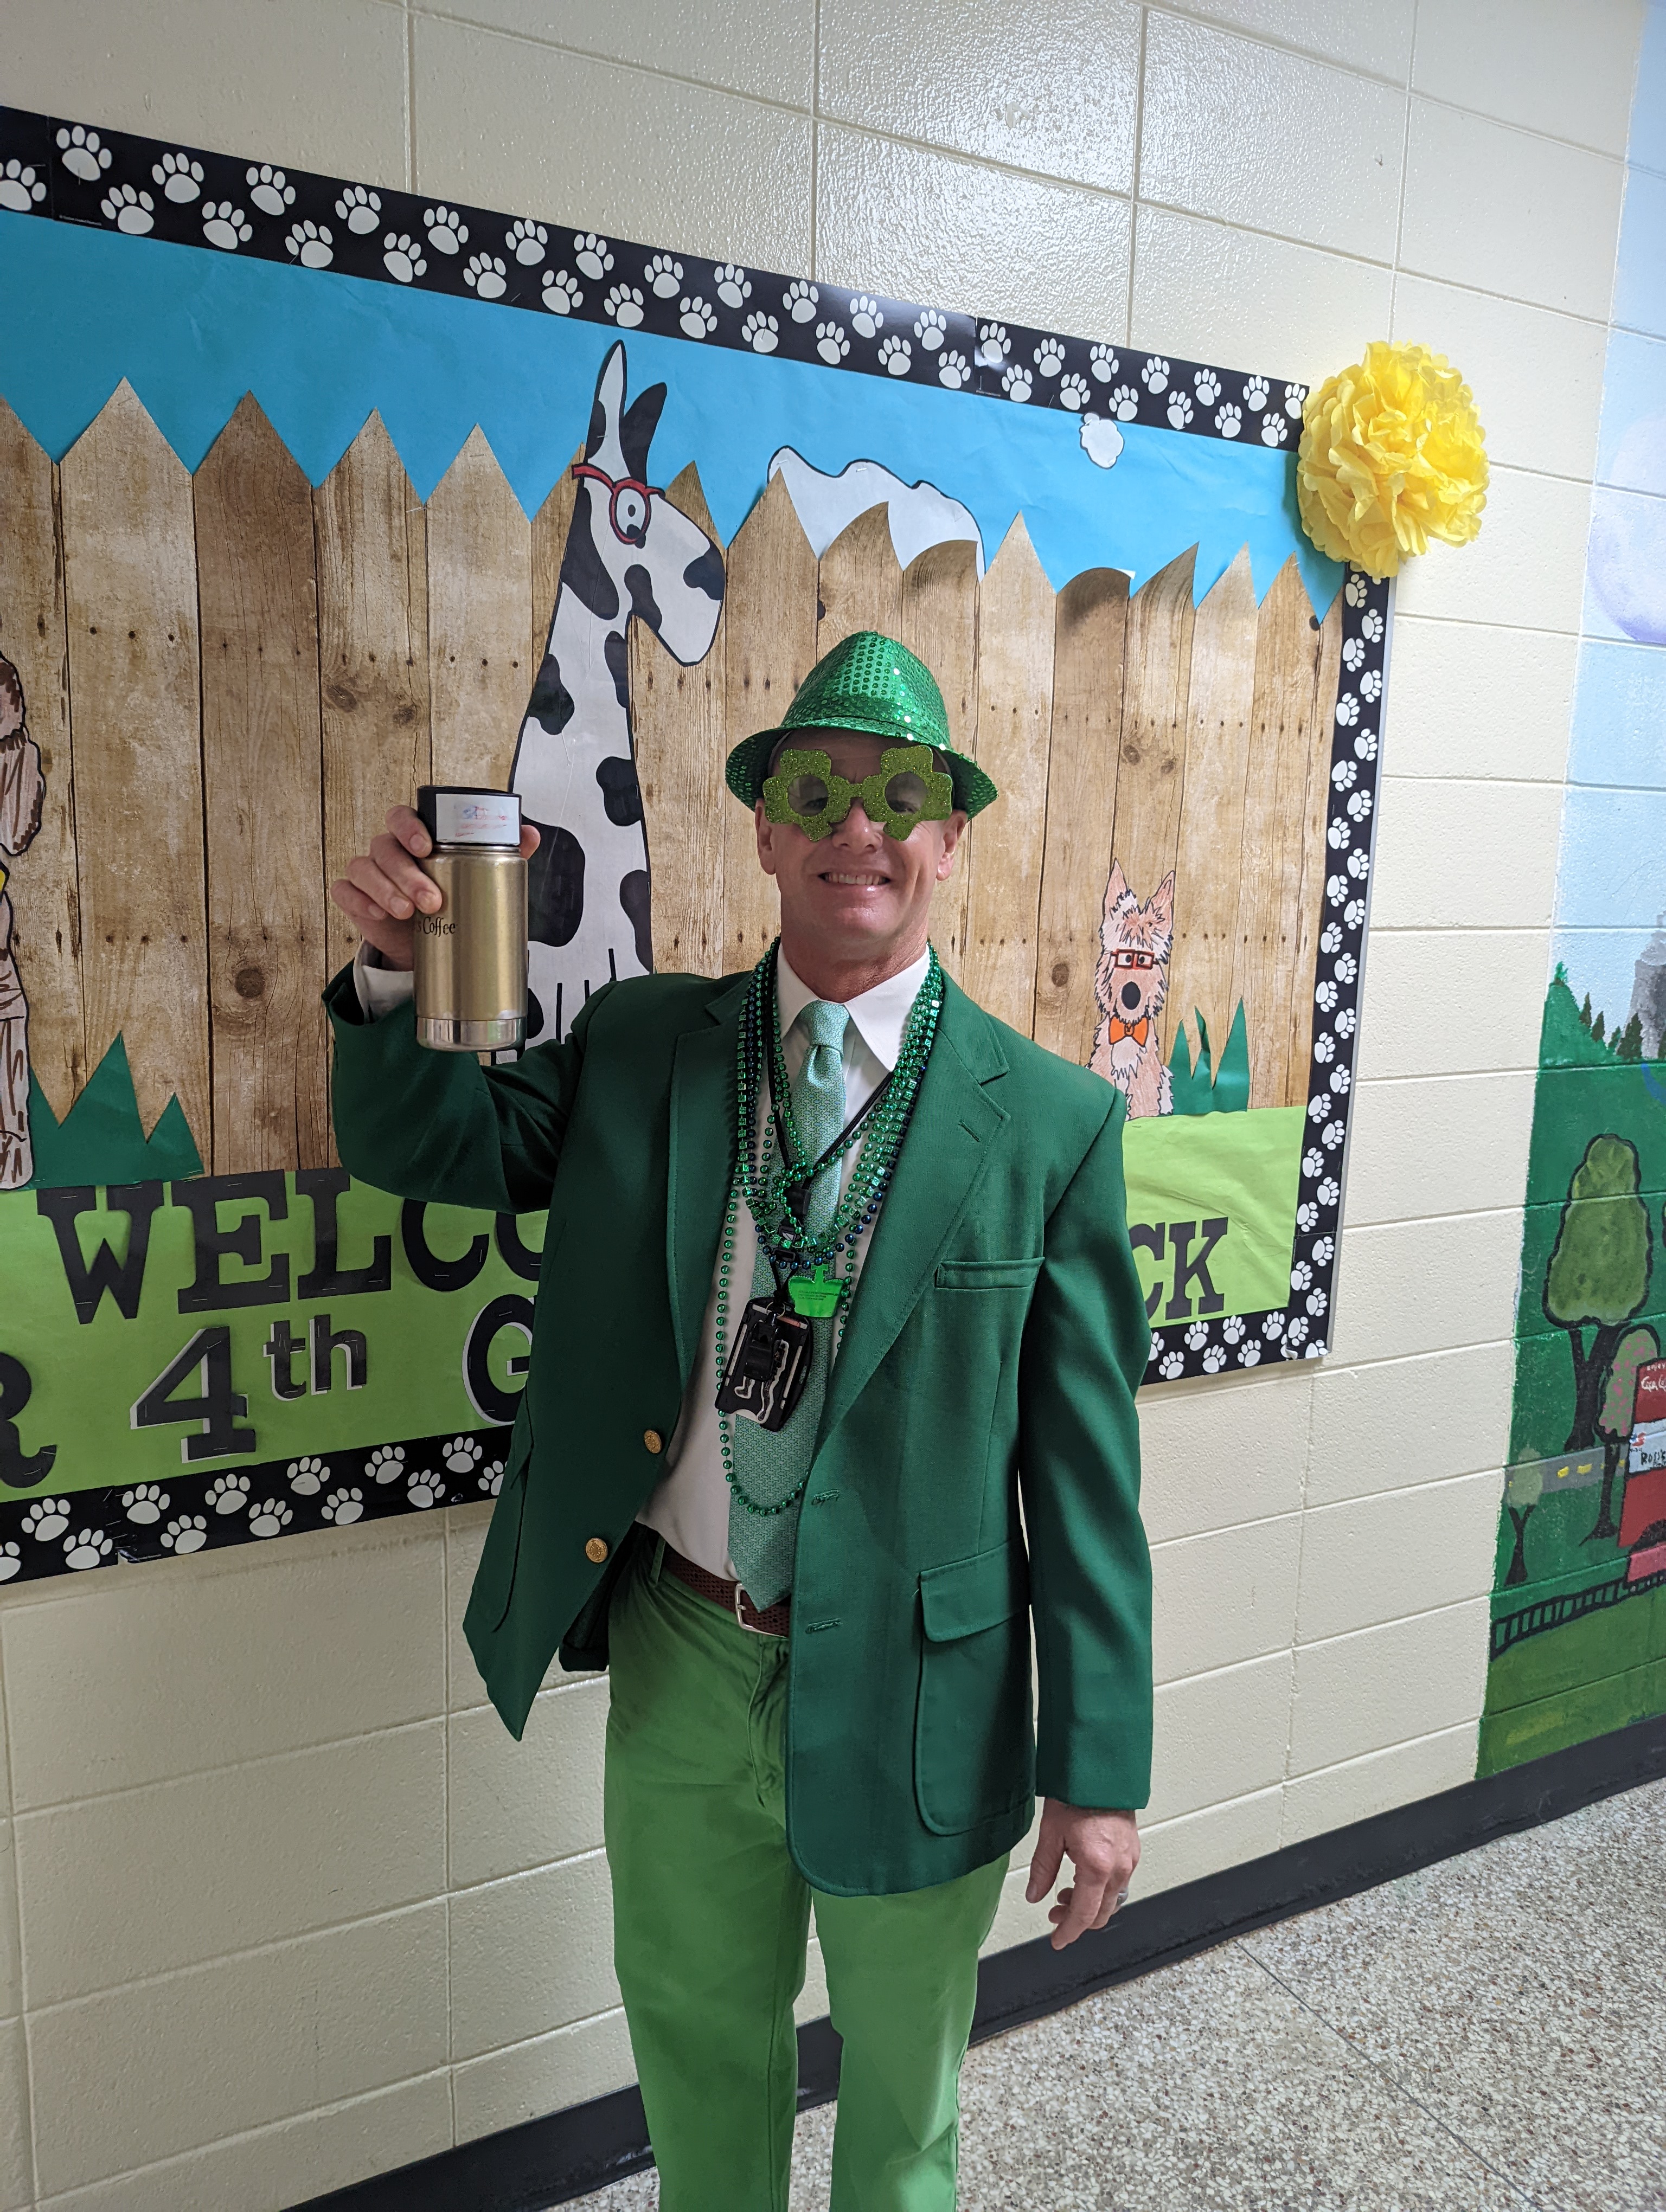 Happy St. Patrick's Day, Mr. Gann!